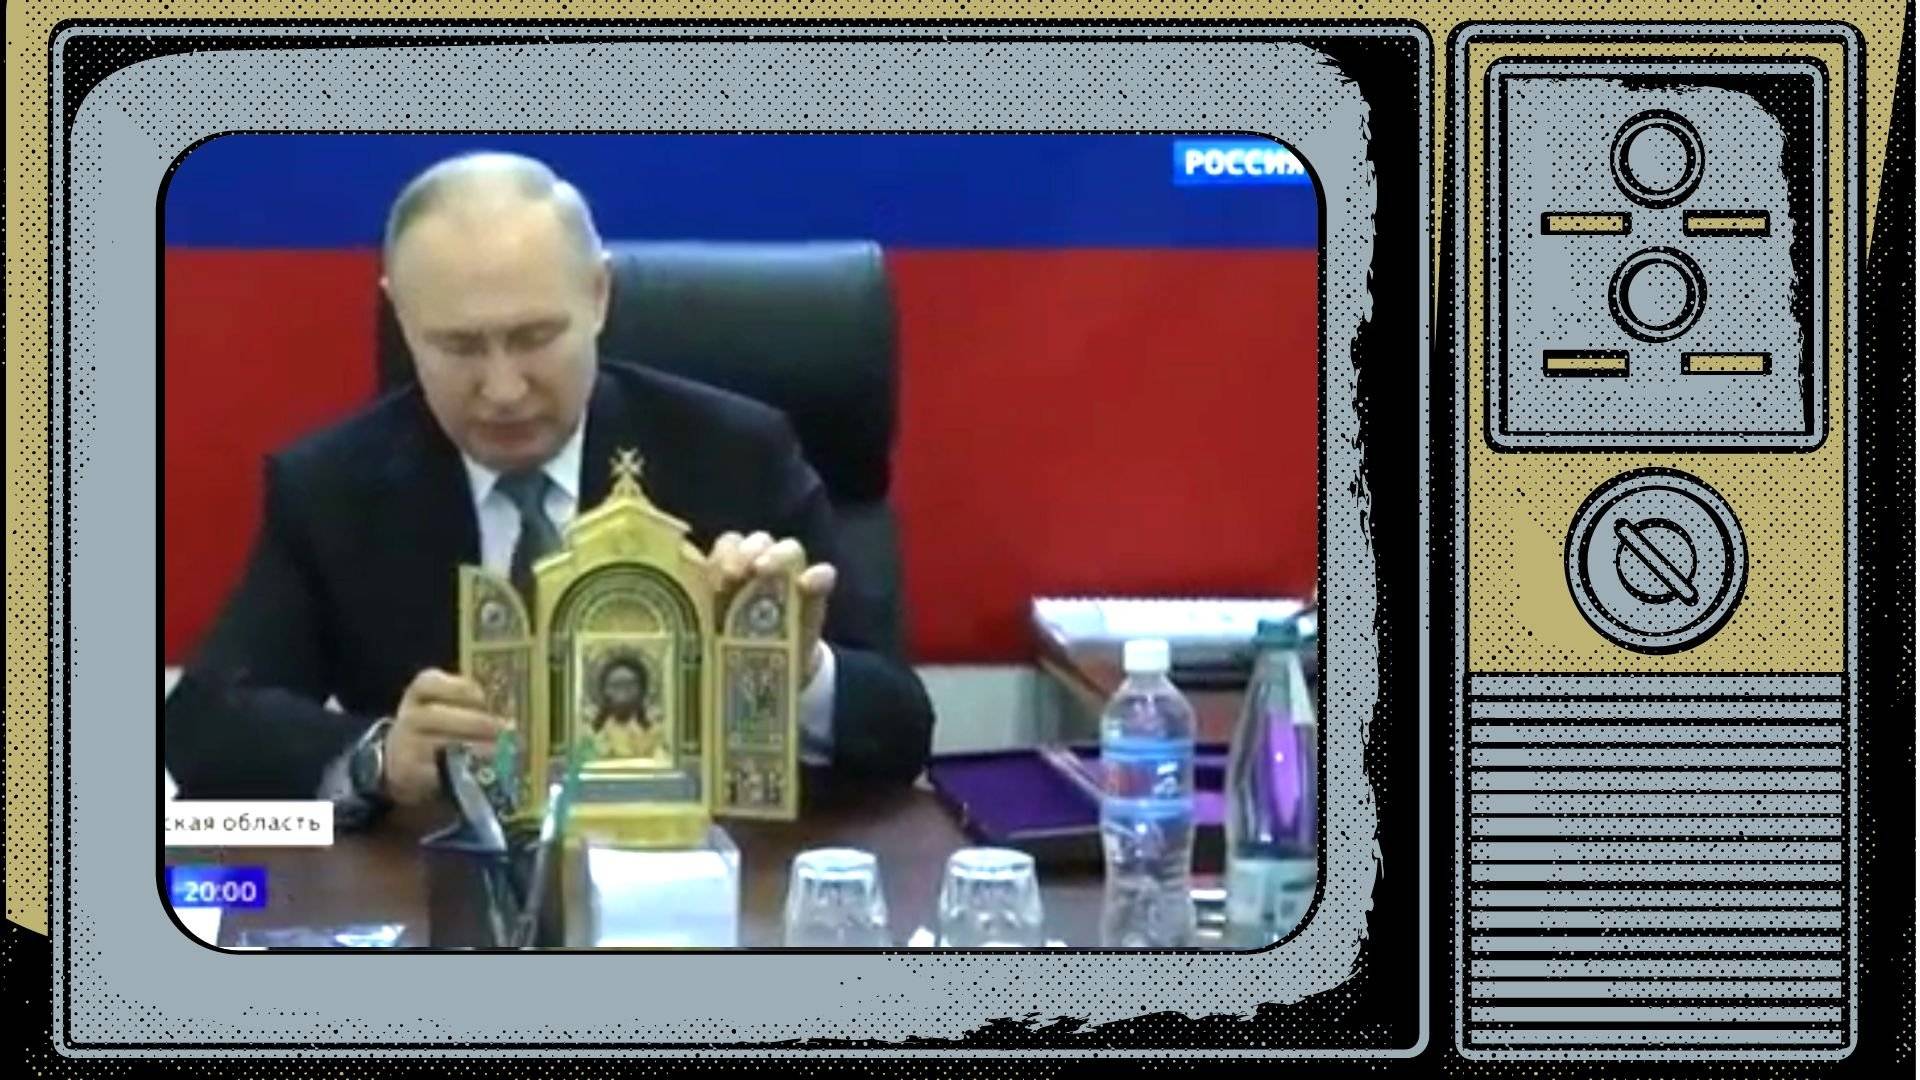 Putin pokazuje ikonę